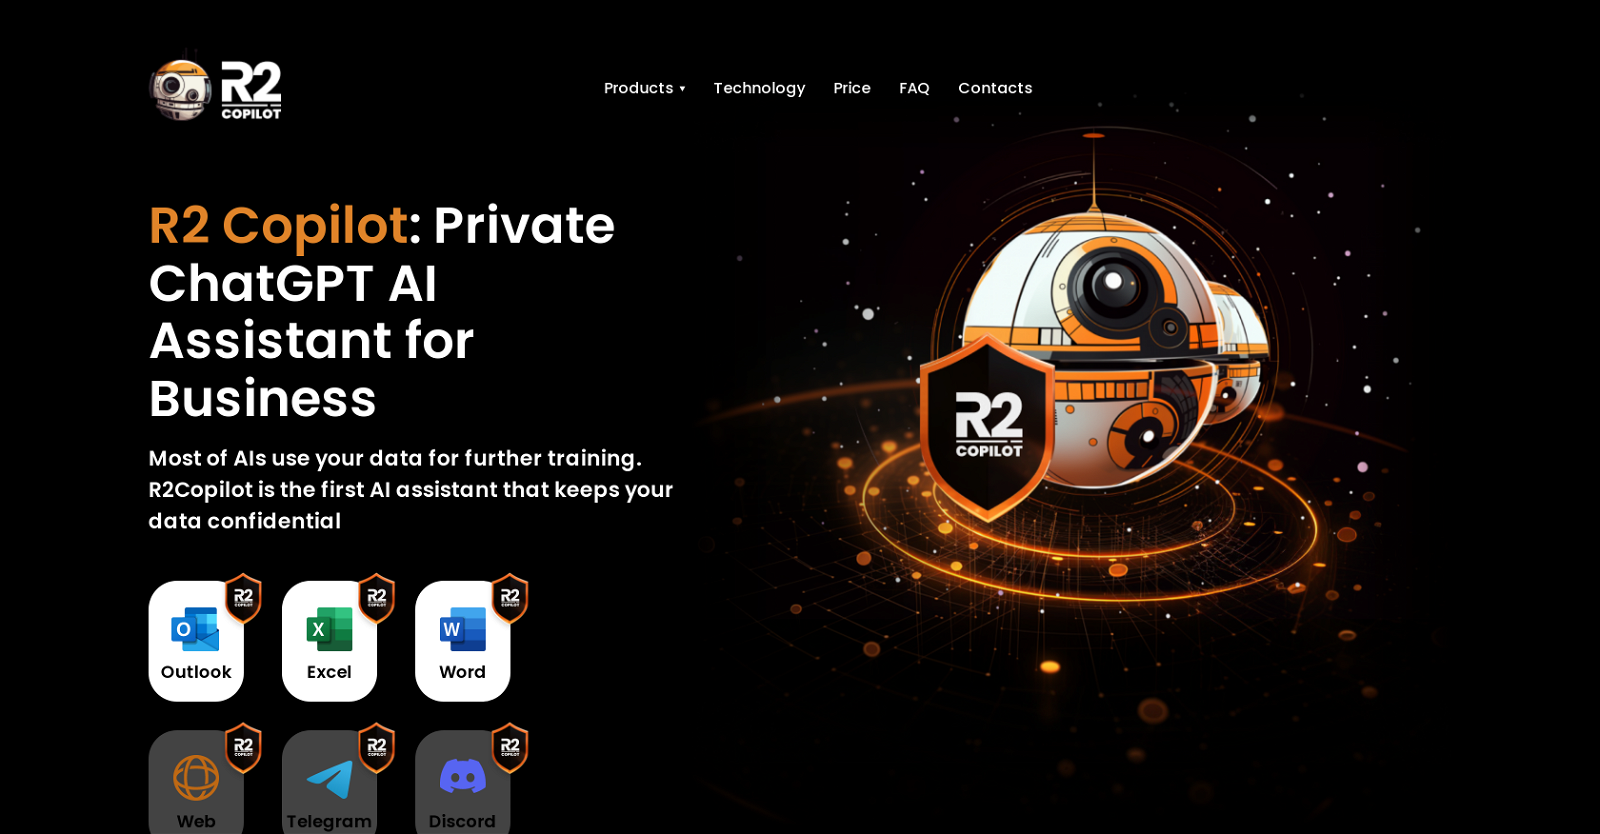 R2 Copilot website